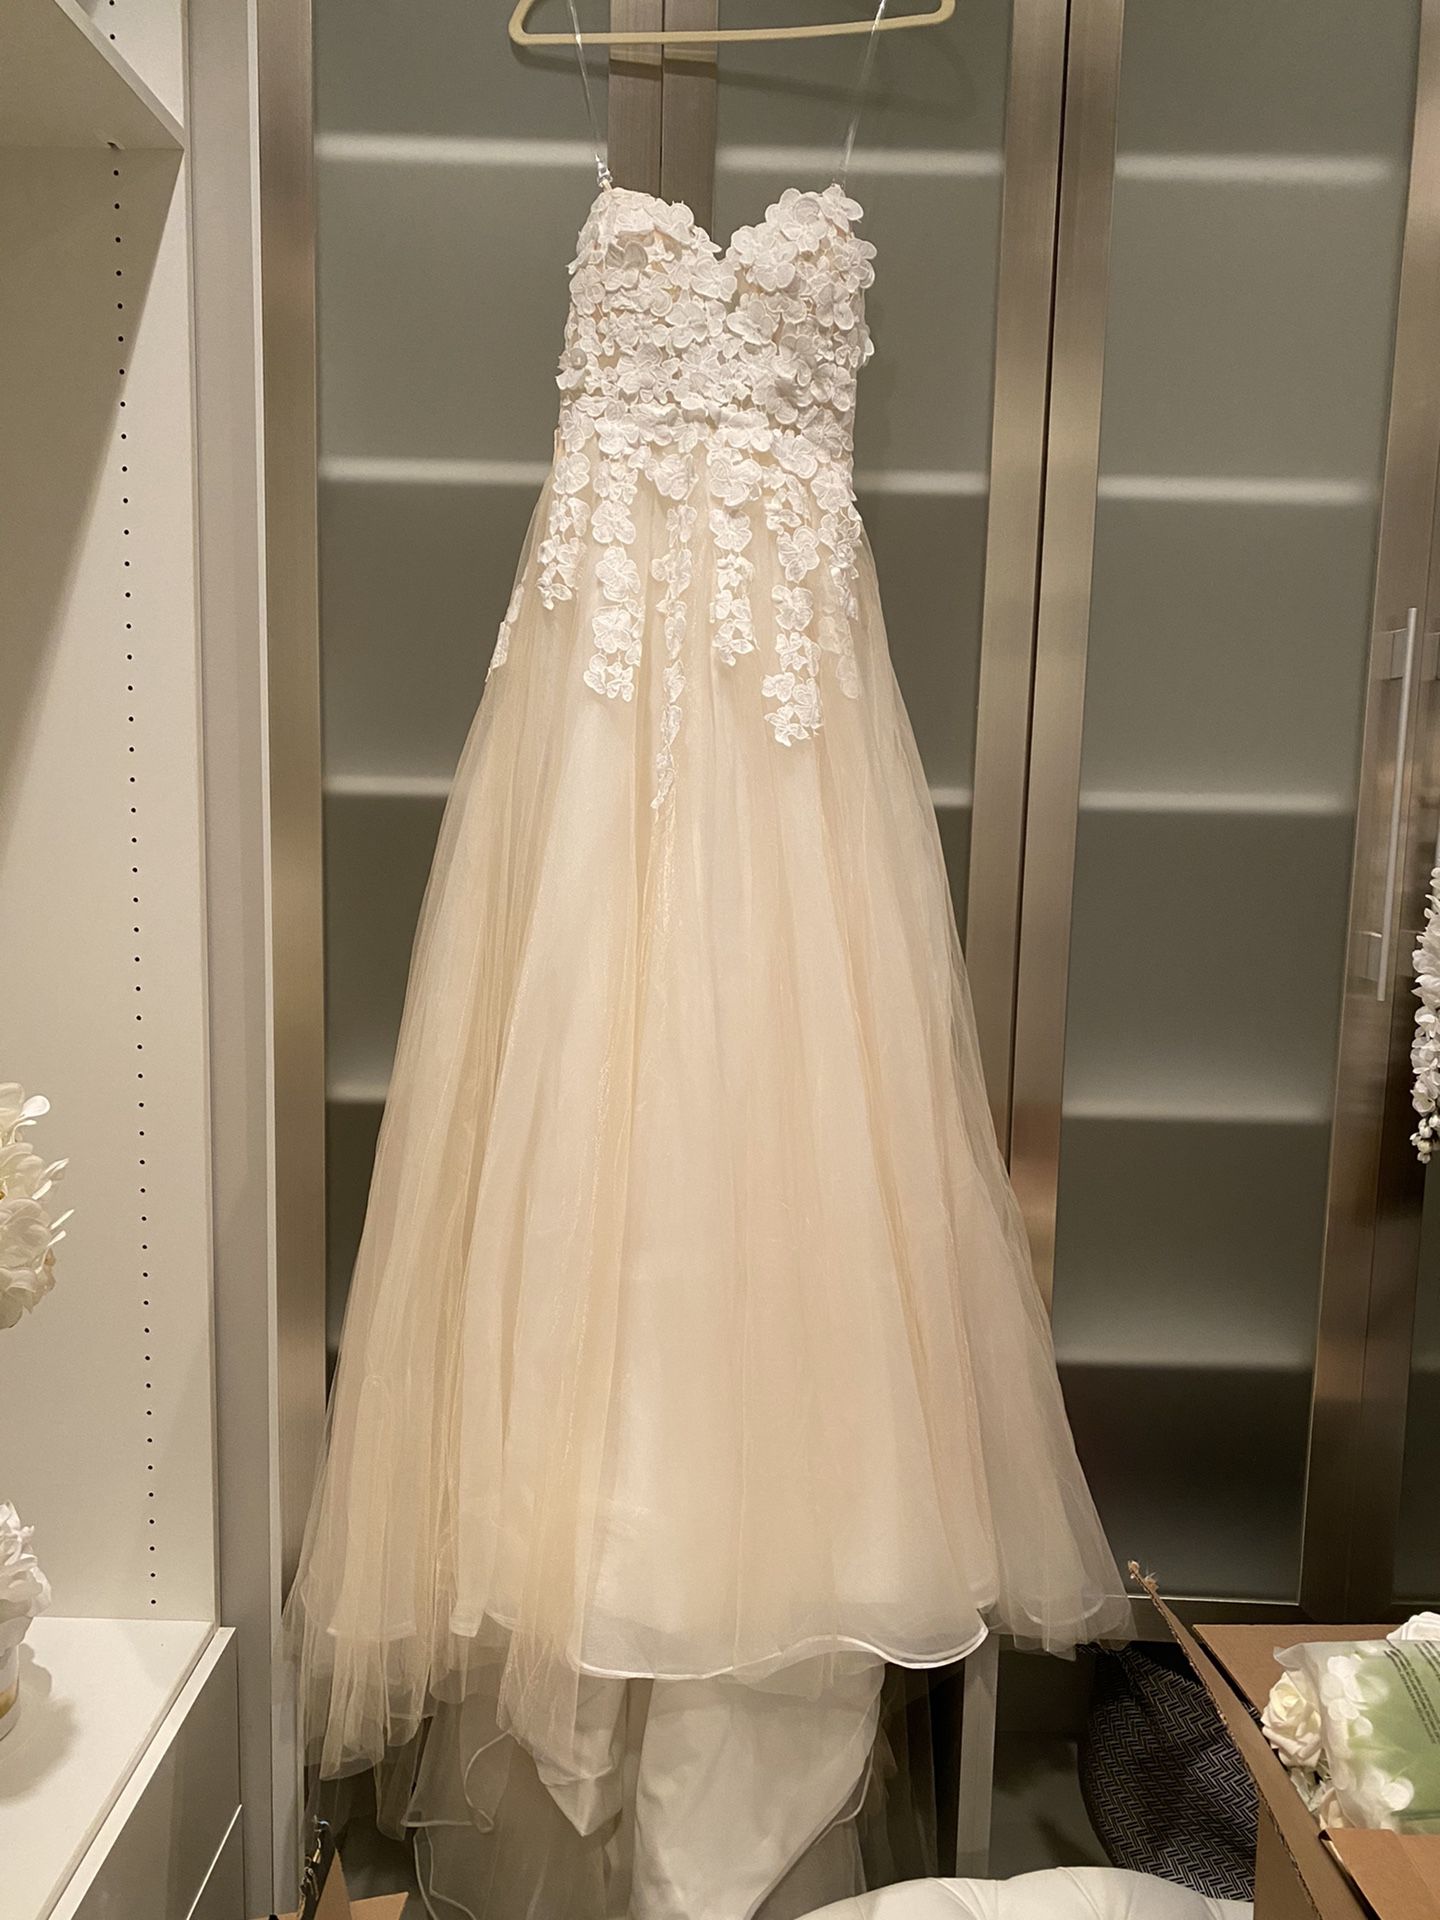 NEW WEDDING DRESS! Size US 4/6 3D floral